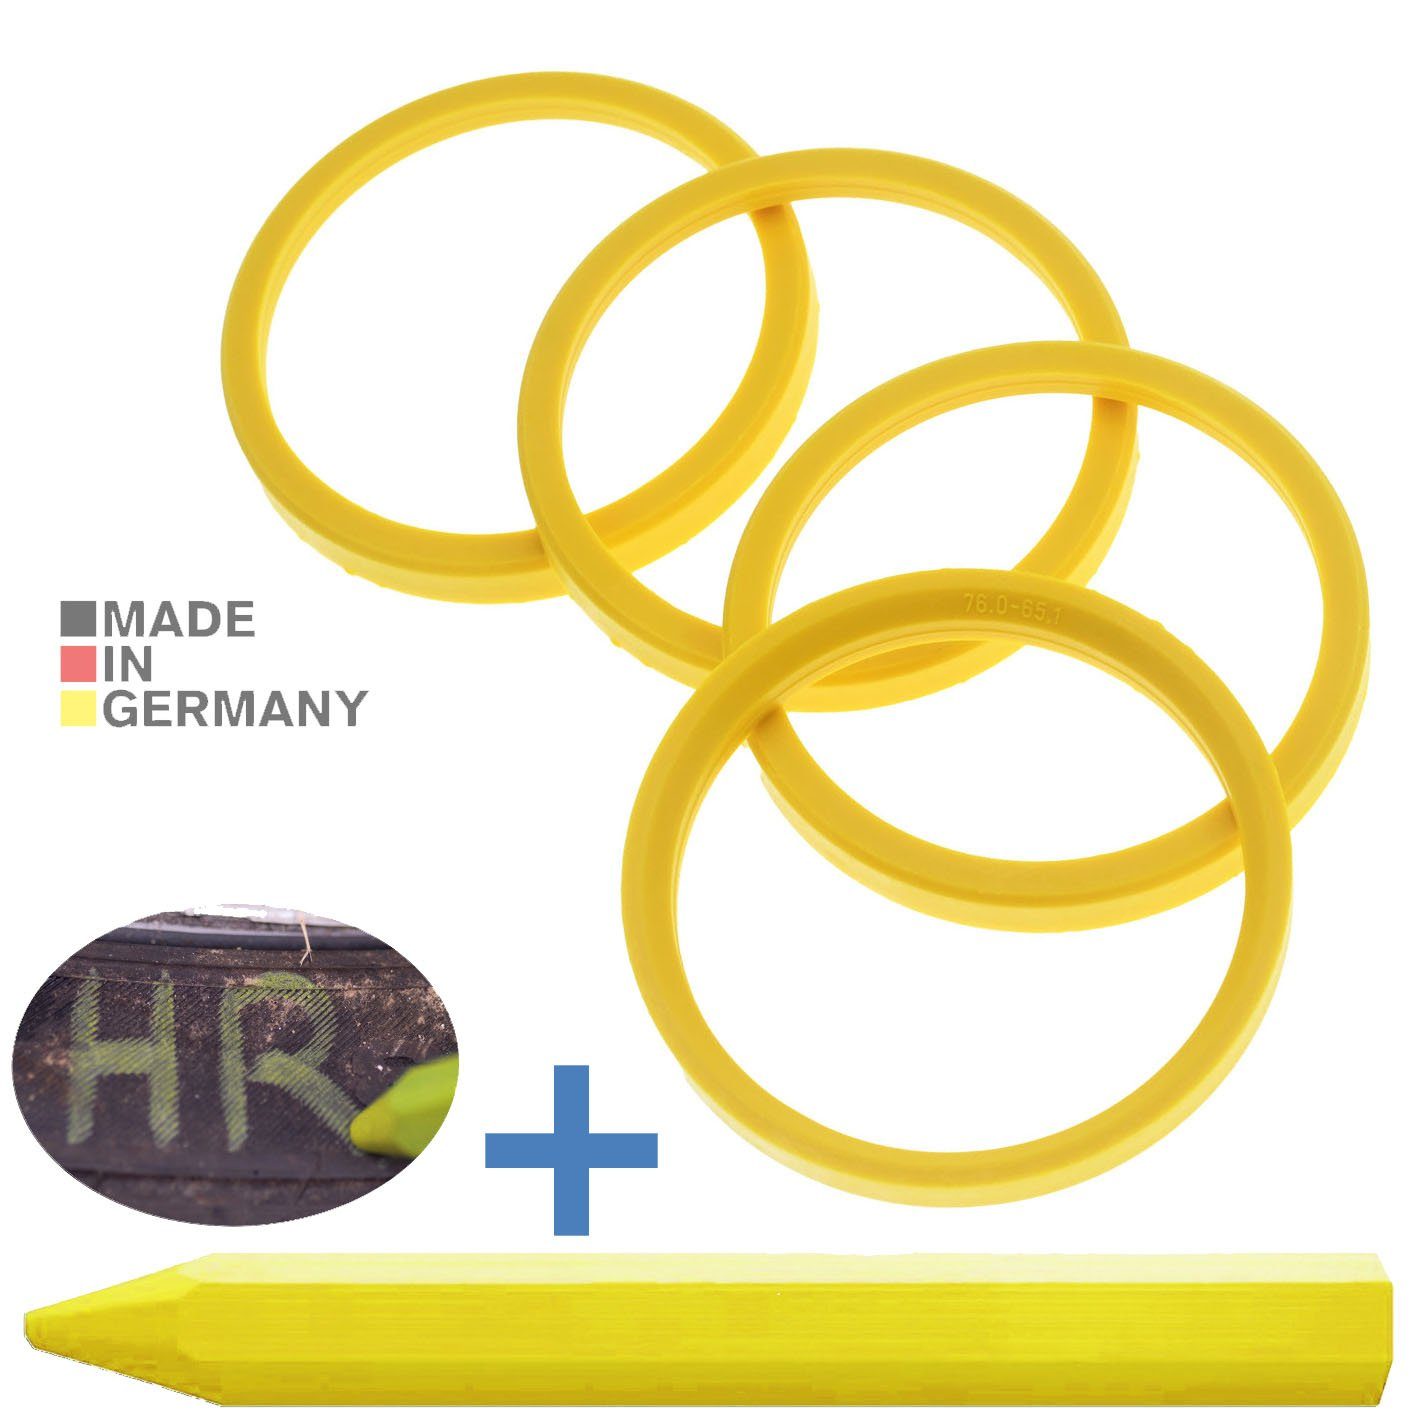 RKC Reifenstift 4X Zentrierringe Hellgelb Felgen Ringe + 1x Reifen Kreide Fett Stift, Maße: 76,0 x 65,1 mm | Reifenstifte